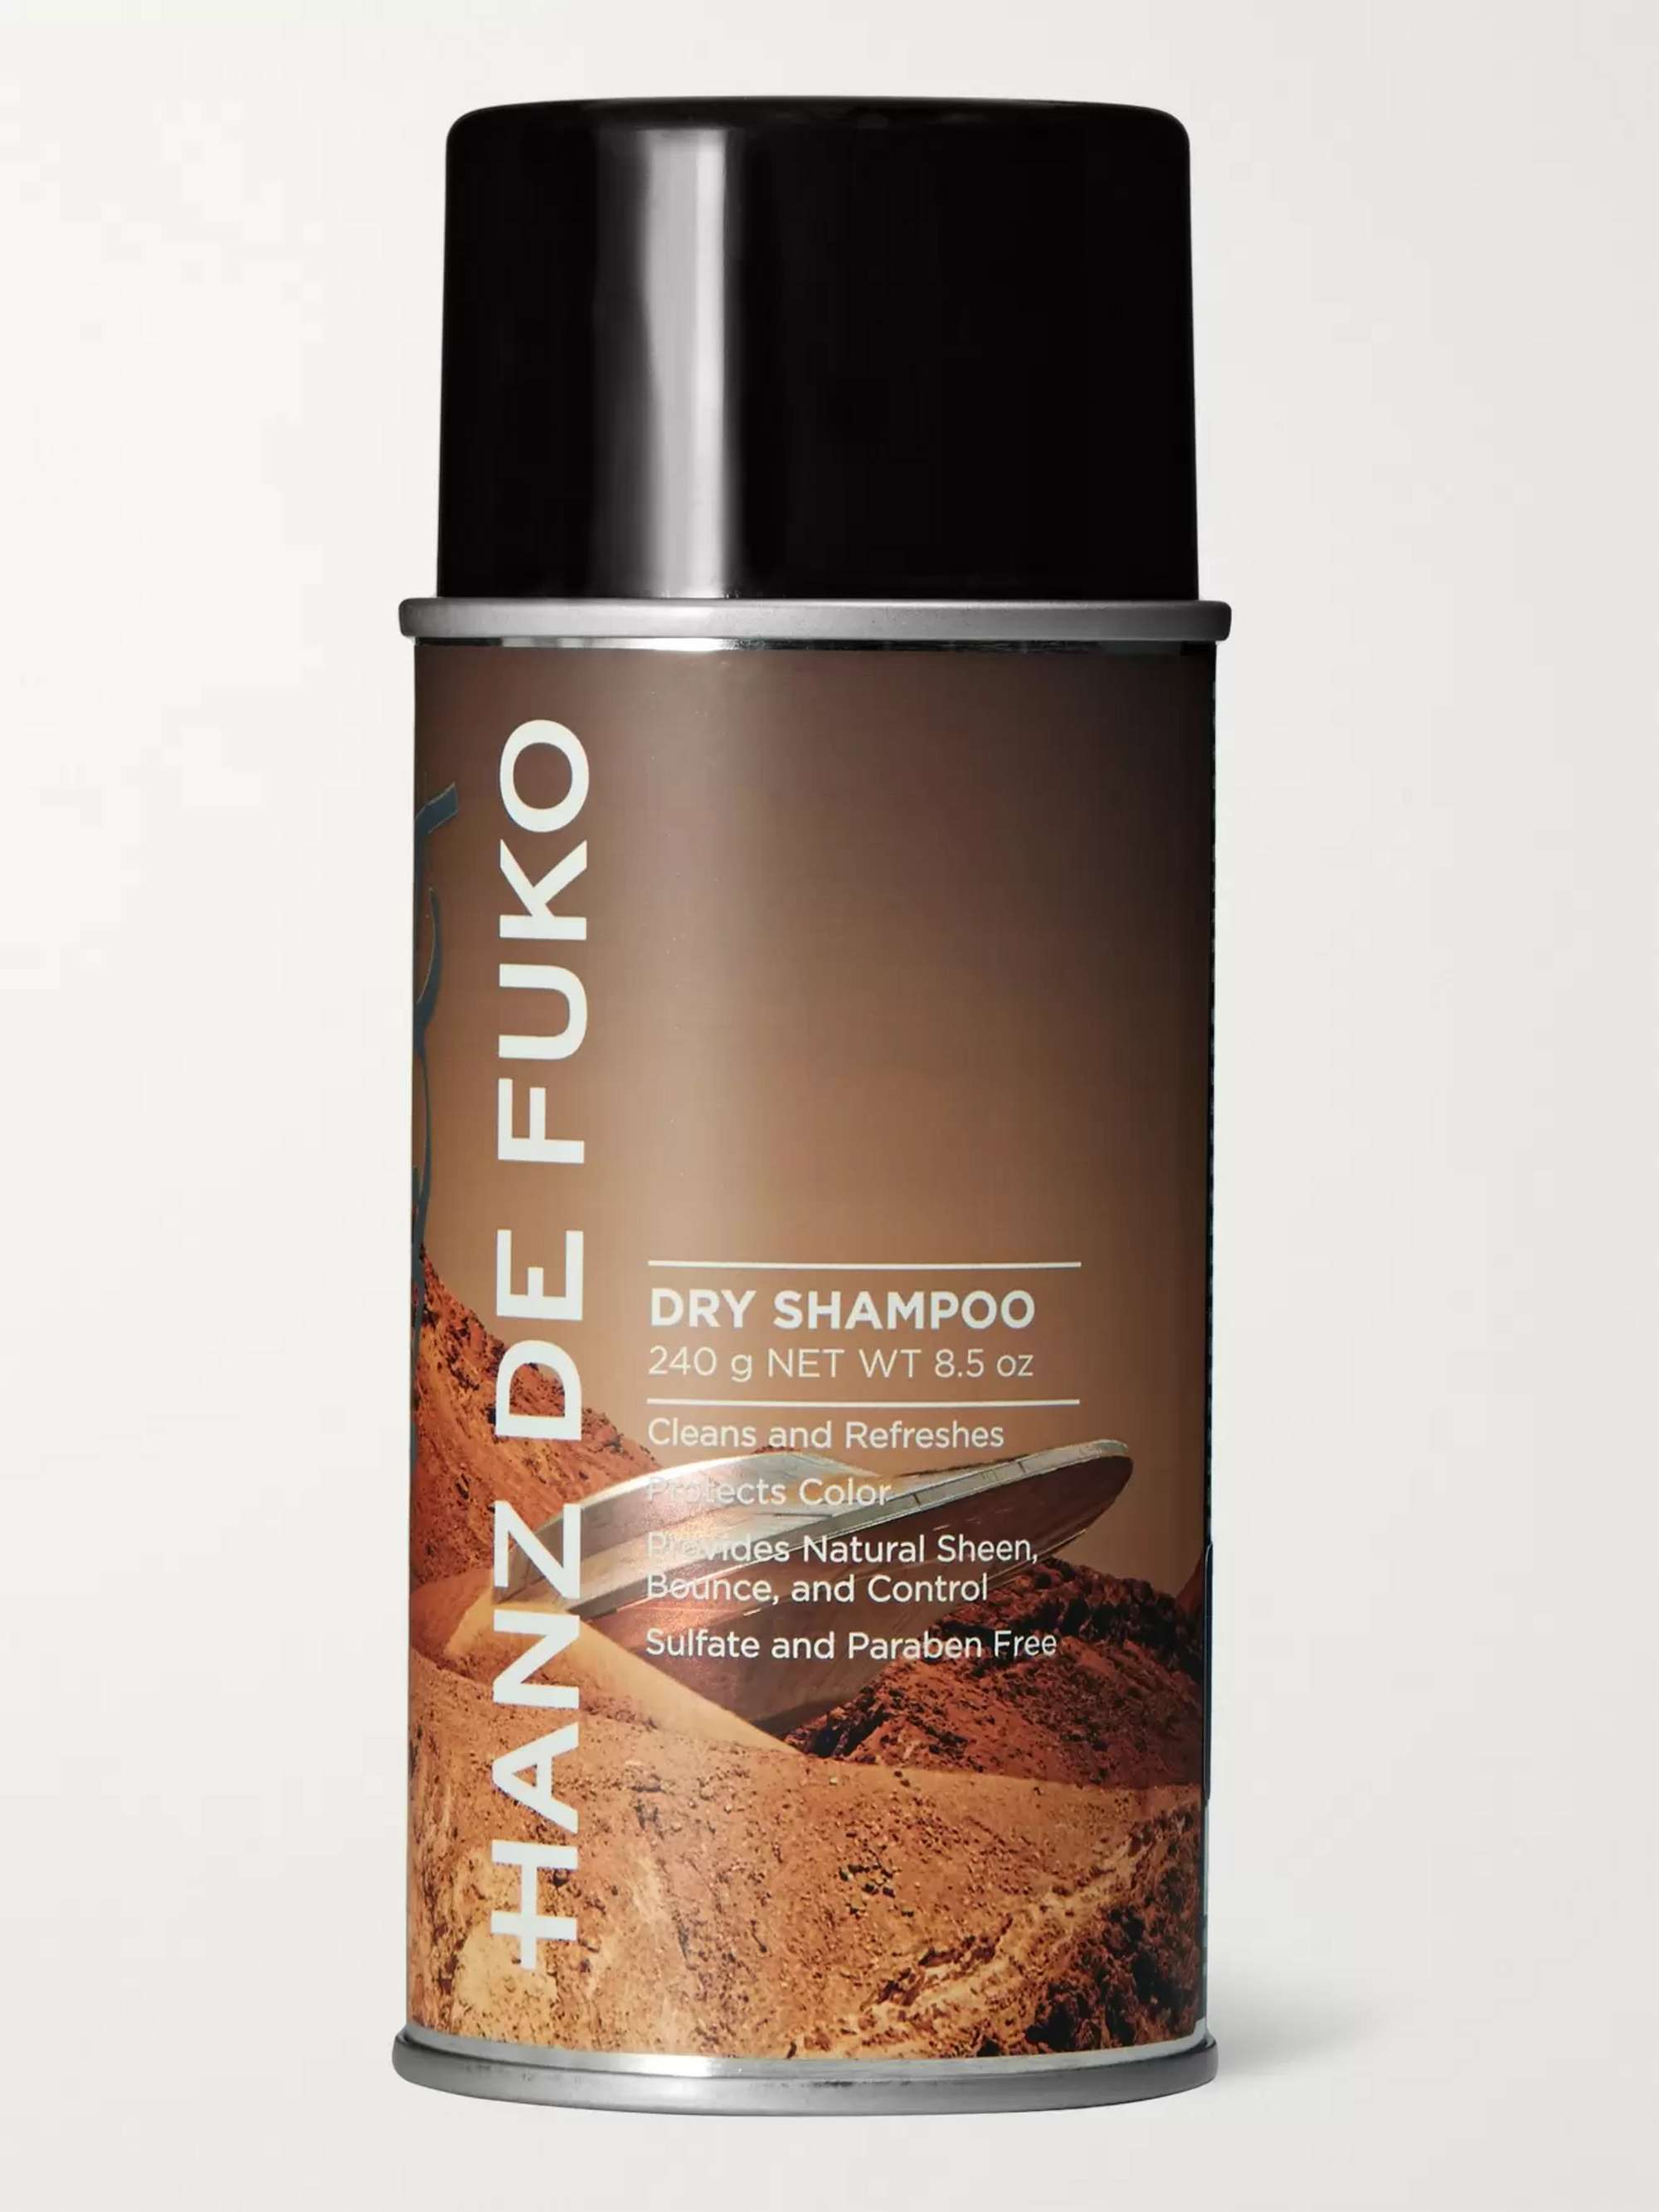 Hanz De Fuko Dry Shampoo, 240g